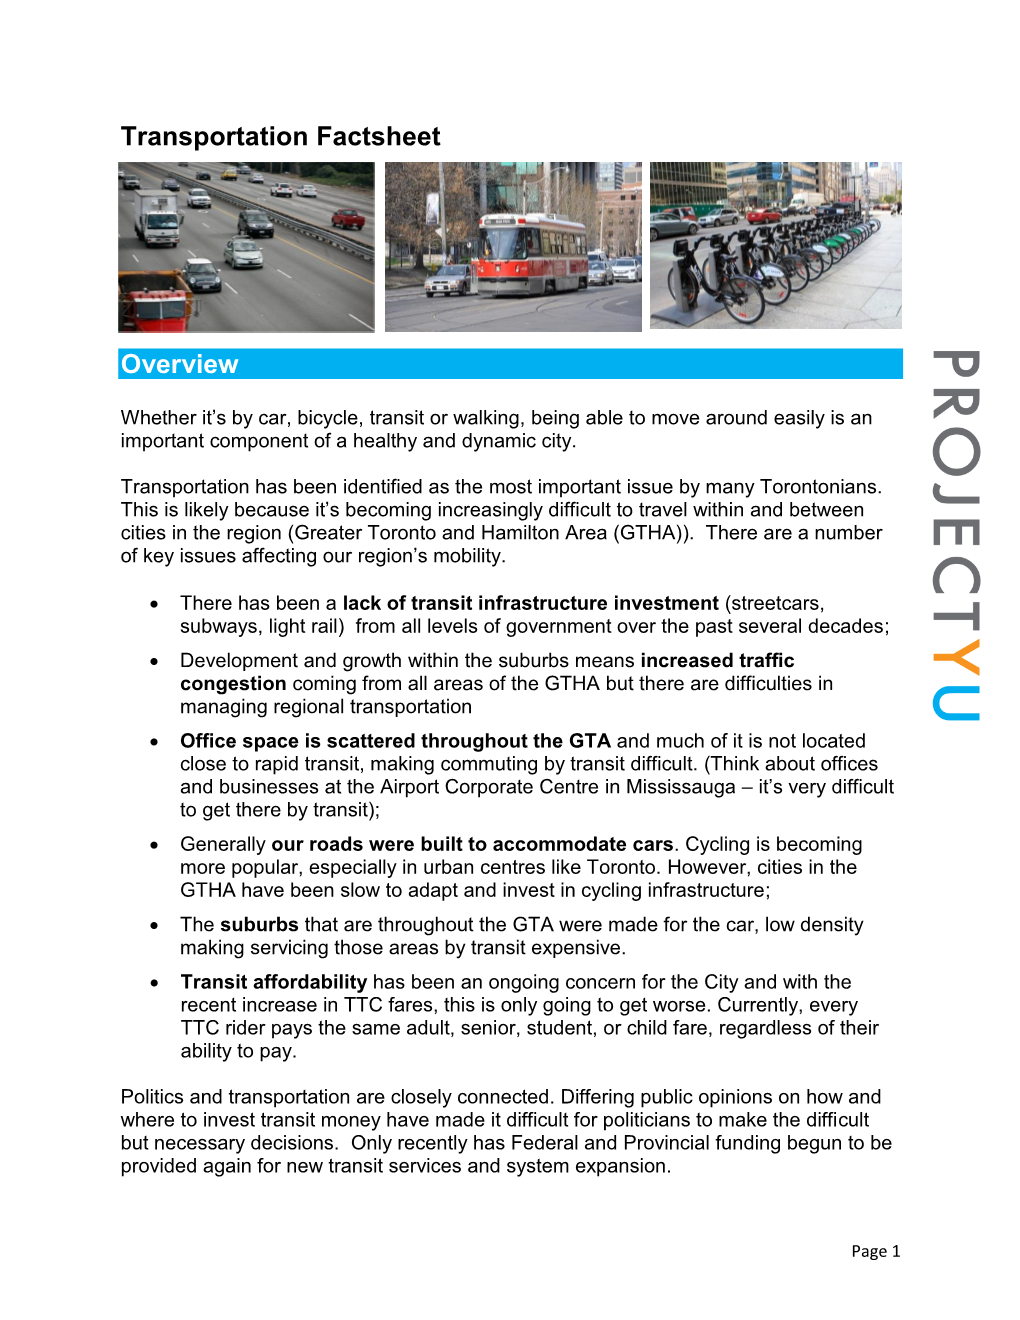 Transportation Factsheet Overview